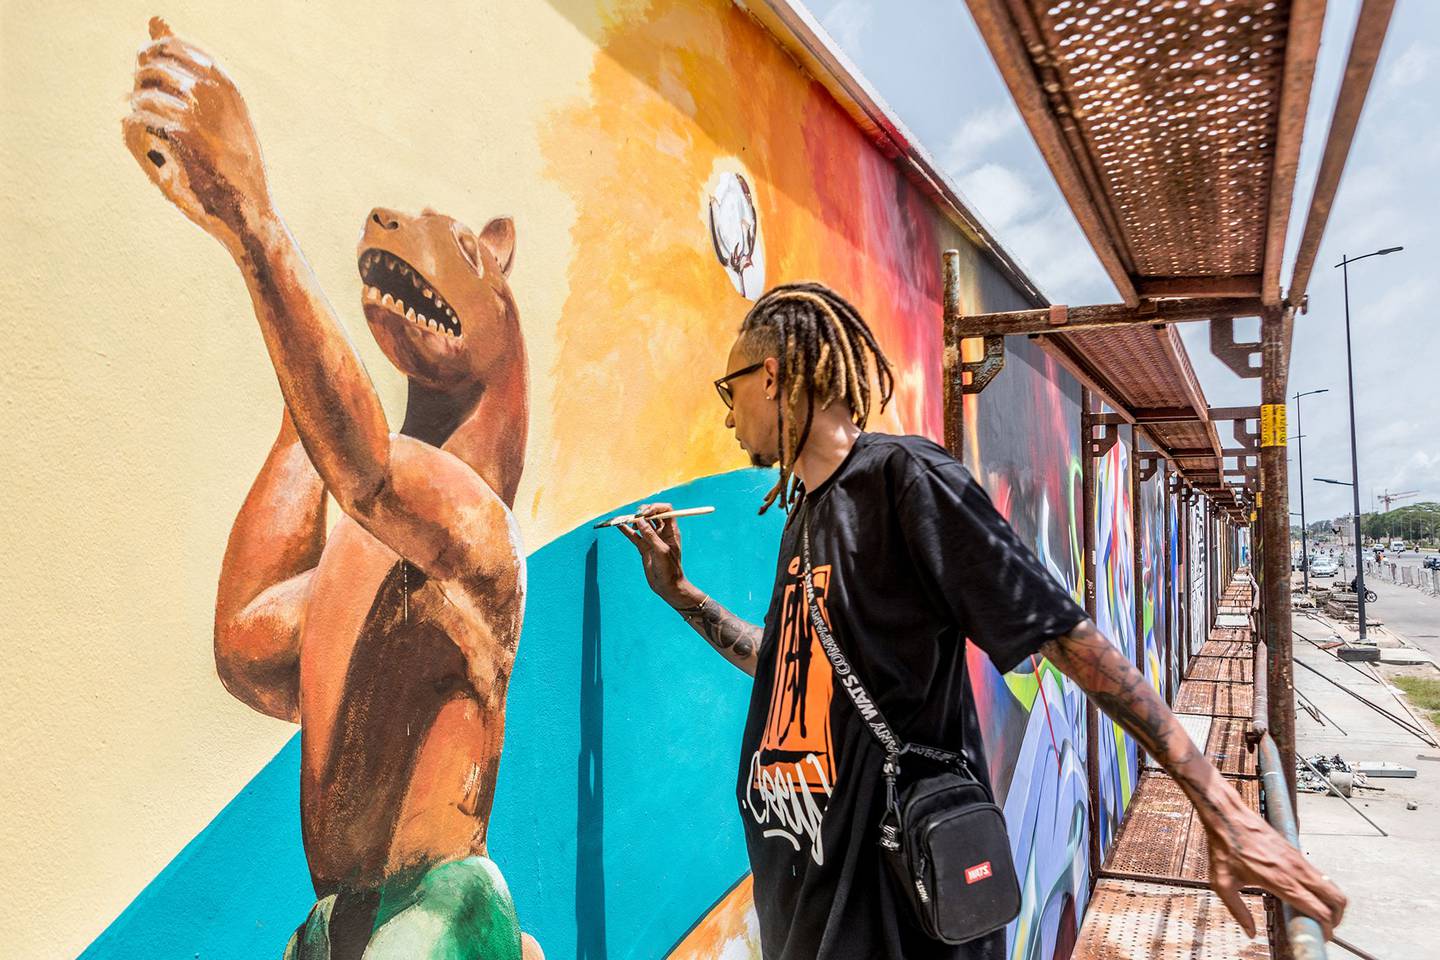 Brazilian artist Edgar Bernado Dos Santos, also known as Ed-mun, paints with a brush at the Effet Graff festival in Benin. AFP